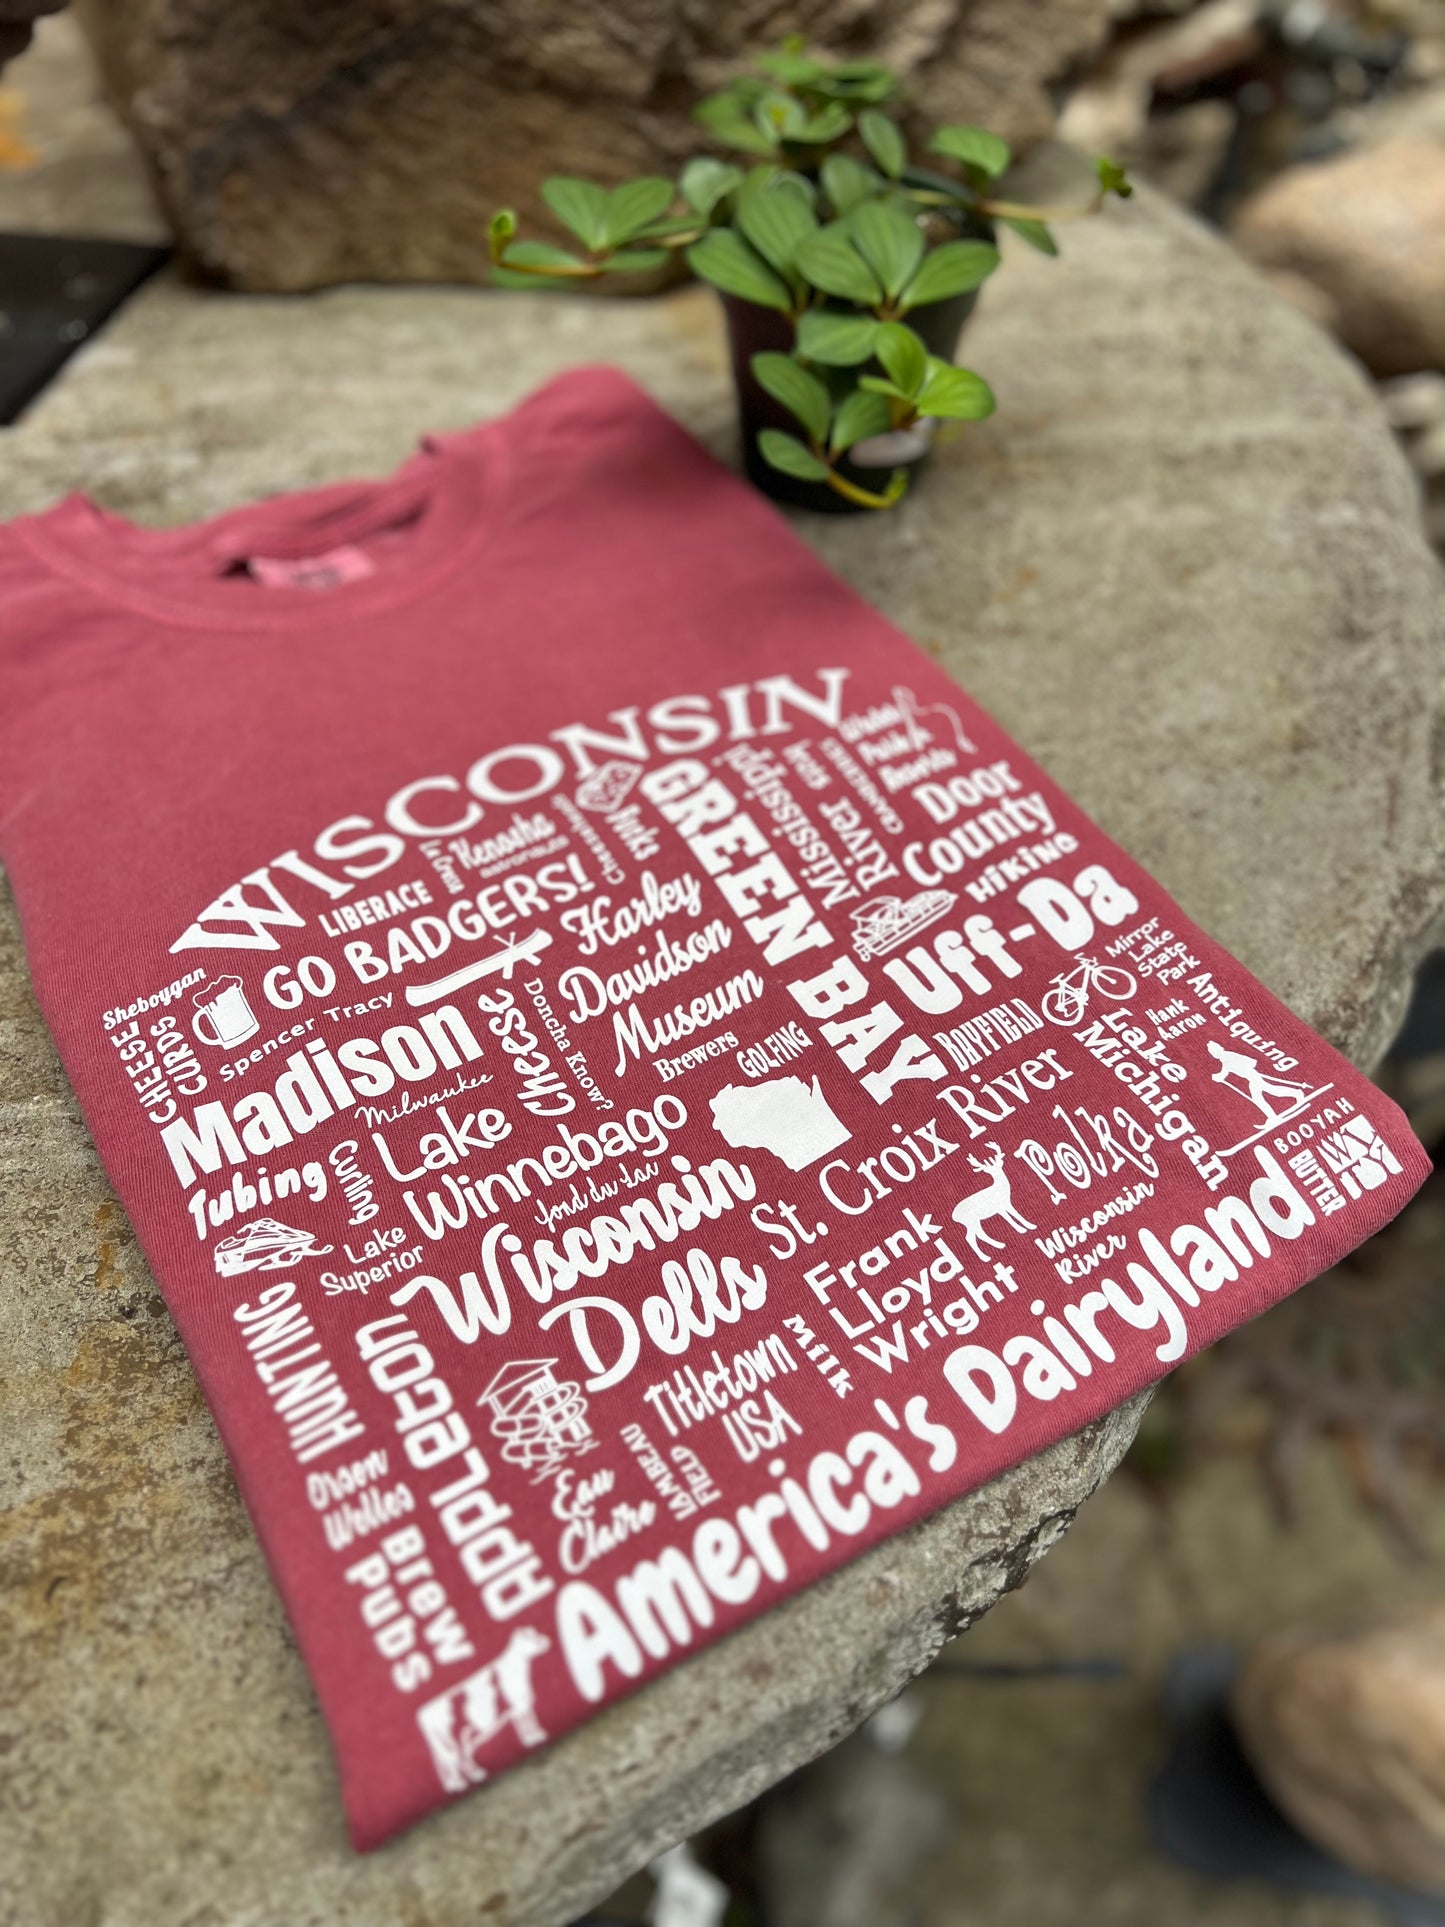 Wisconsin Words T-Shirt